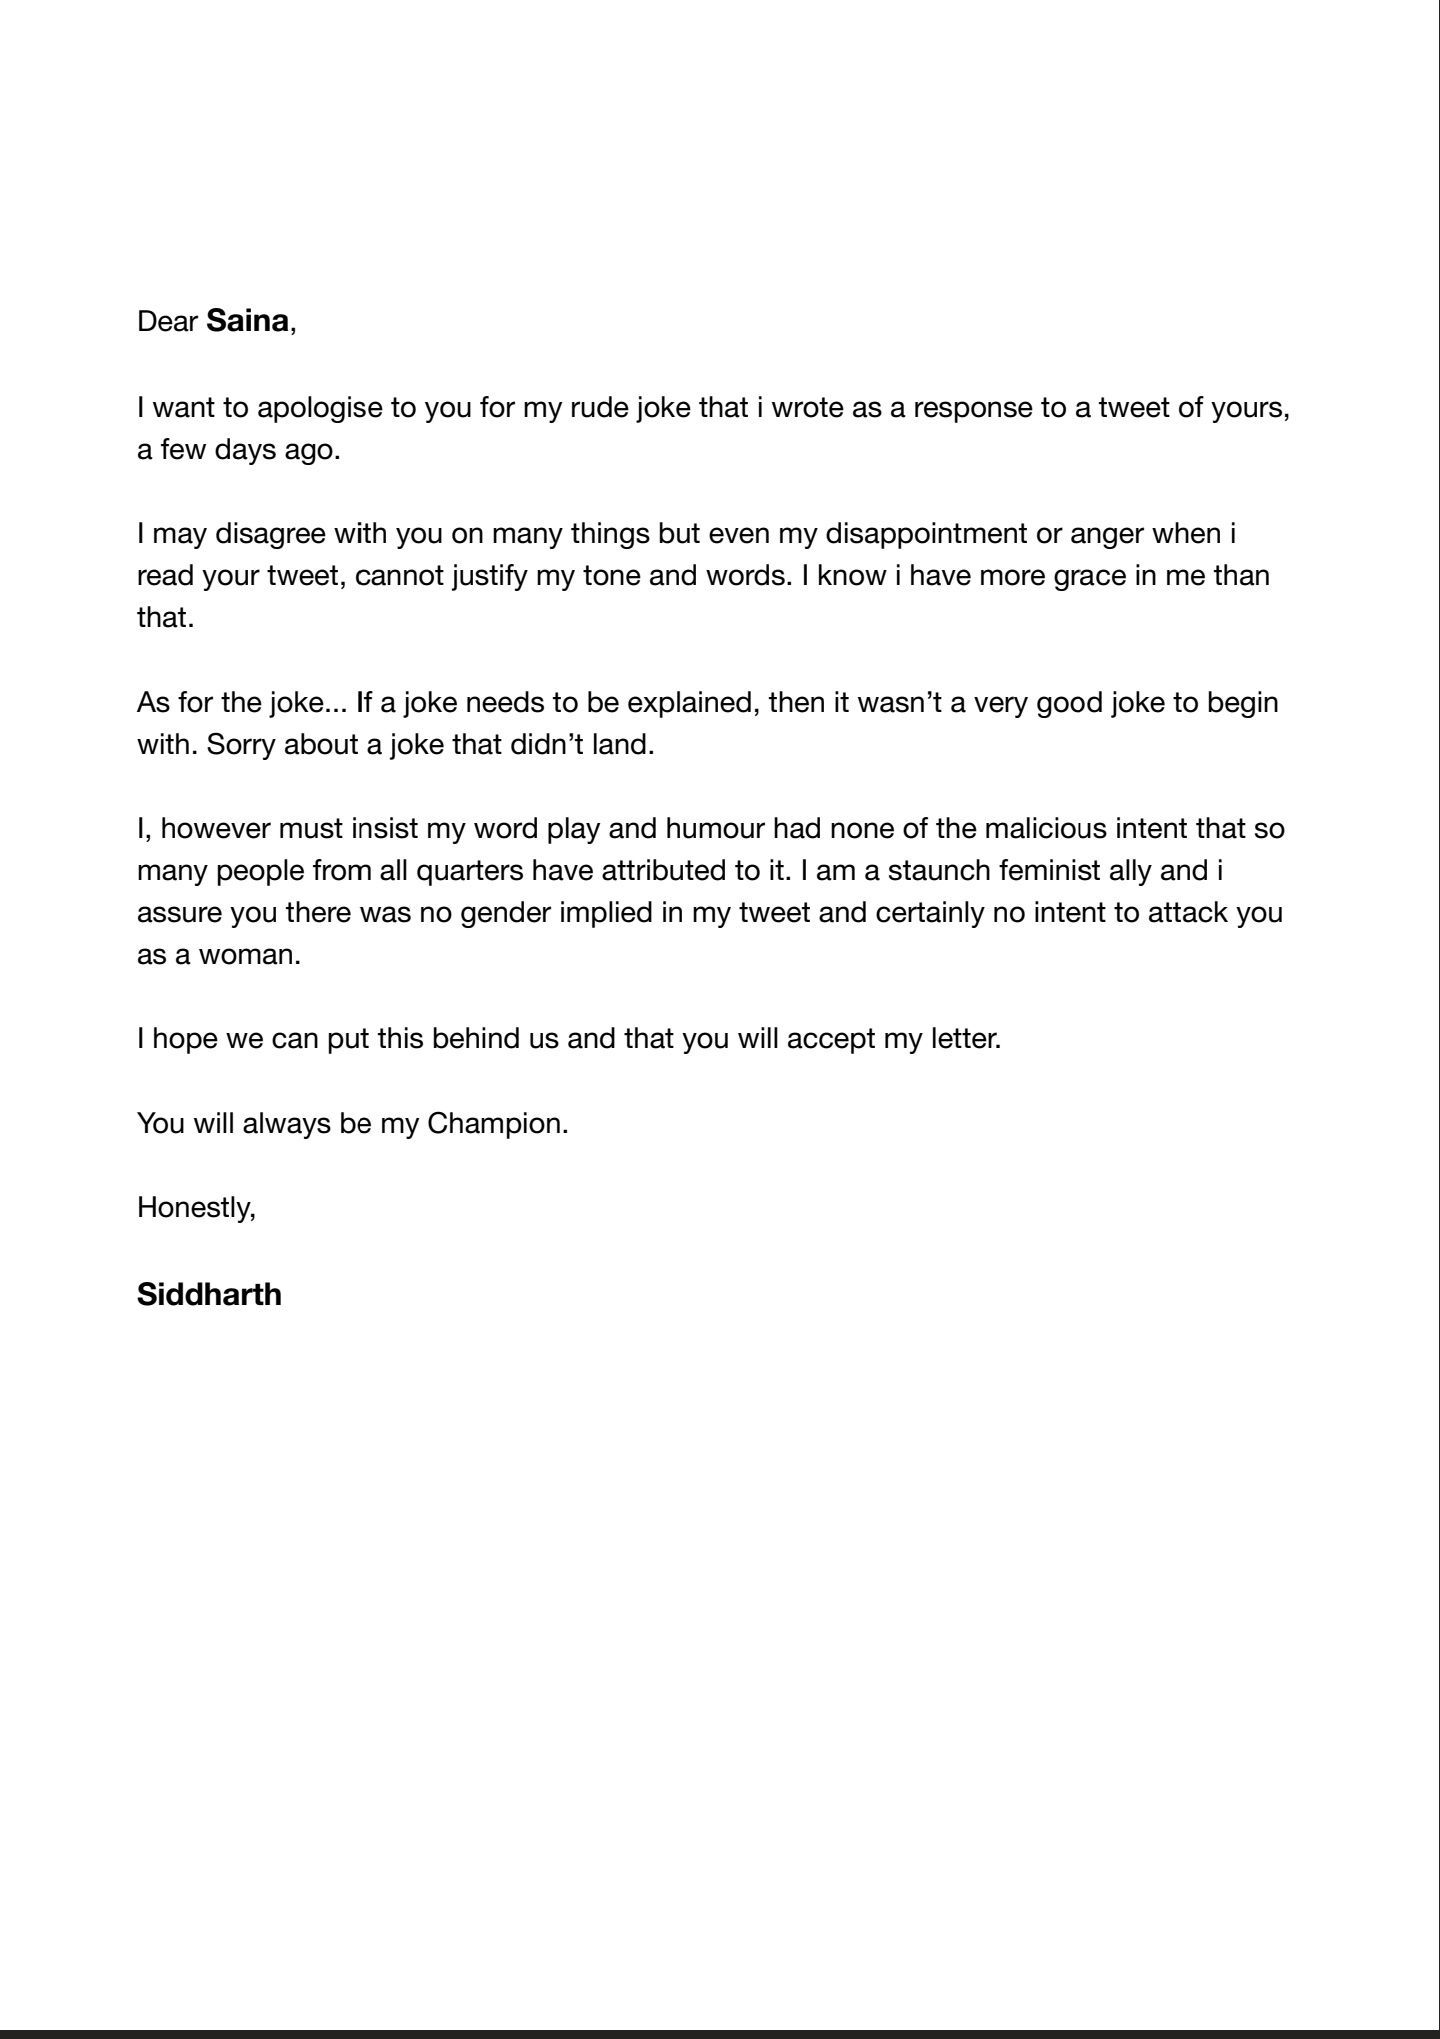 Siddharth apology letter to Saina Nehwal